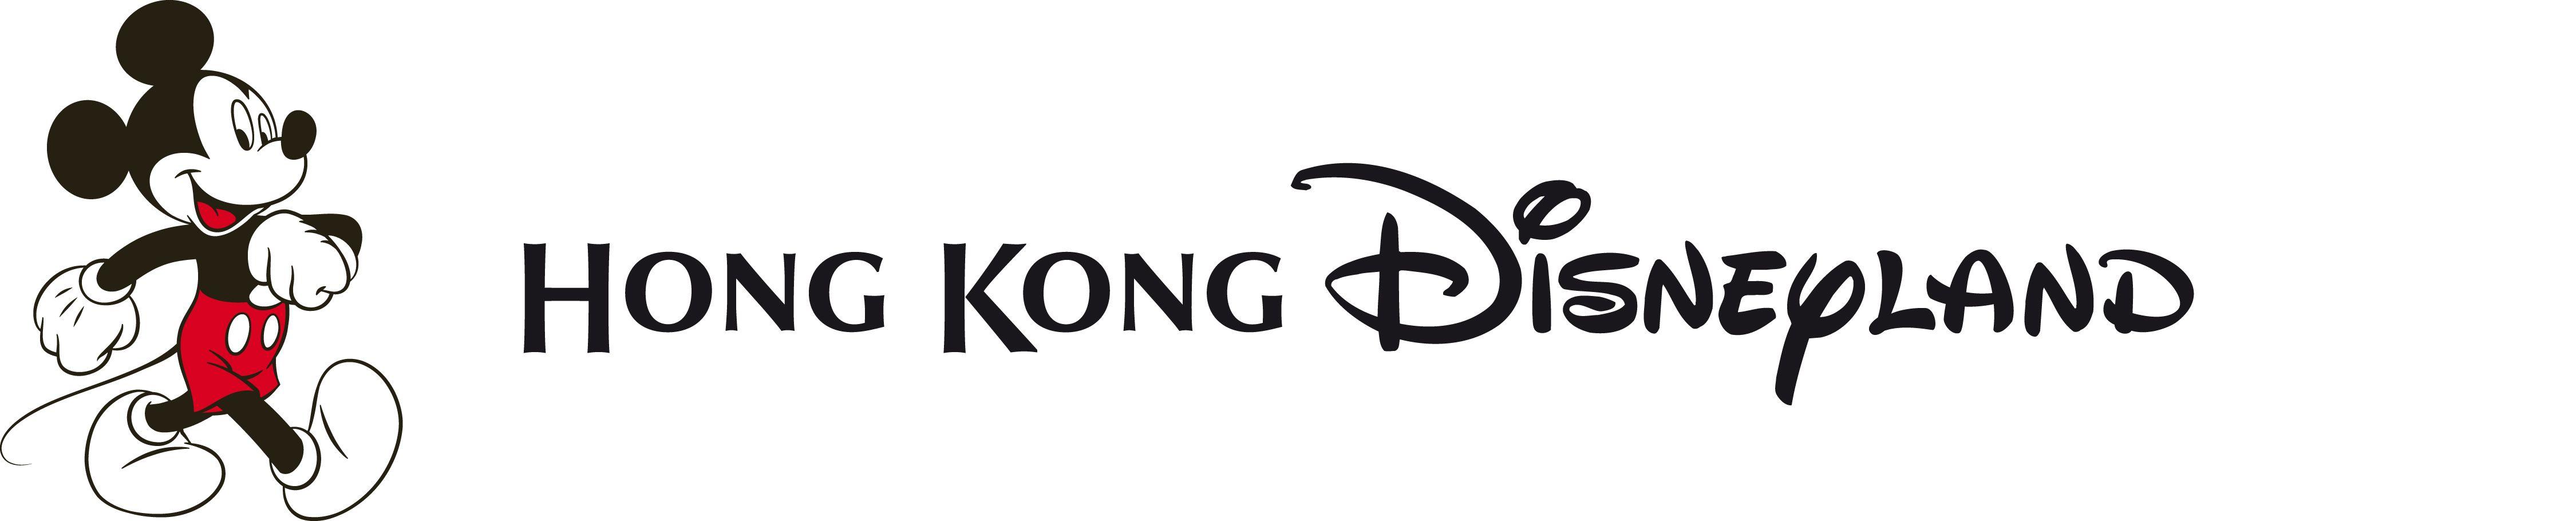 Hong Kong Disneyland Logo - APPENDICES